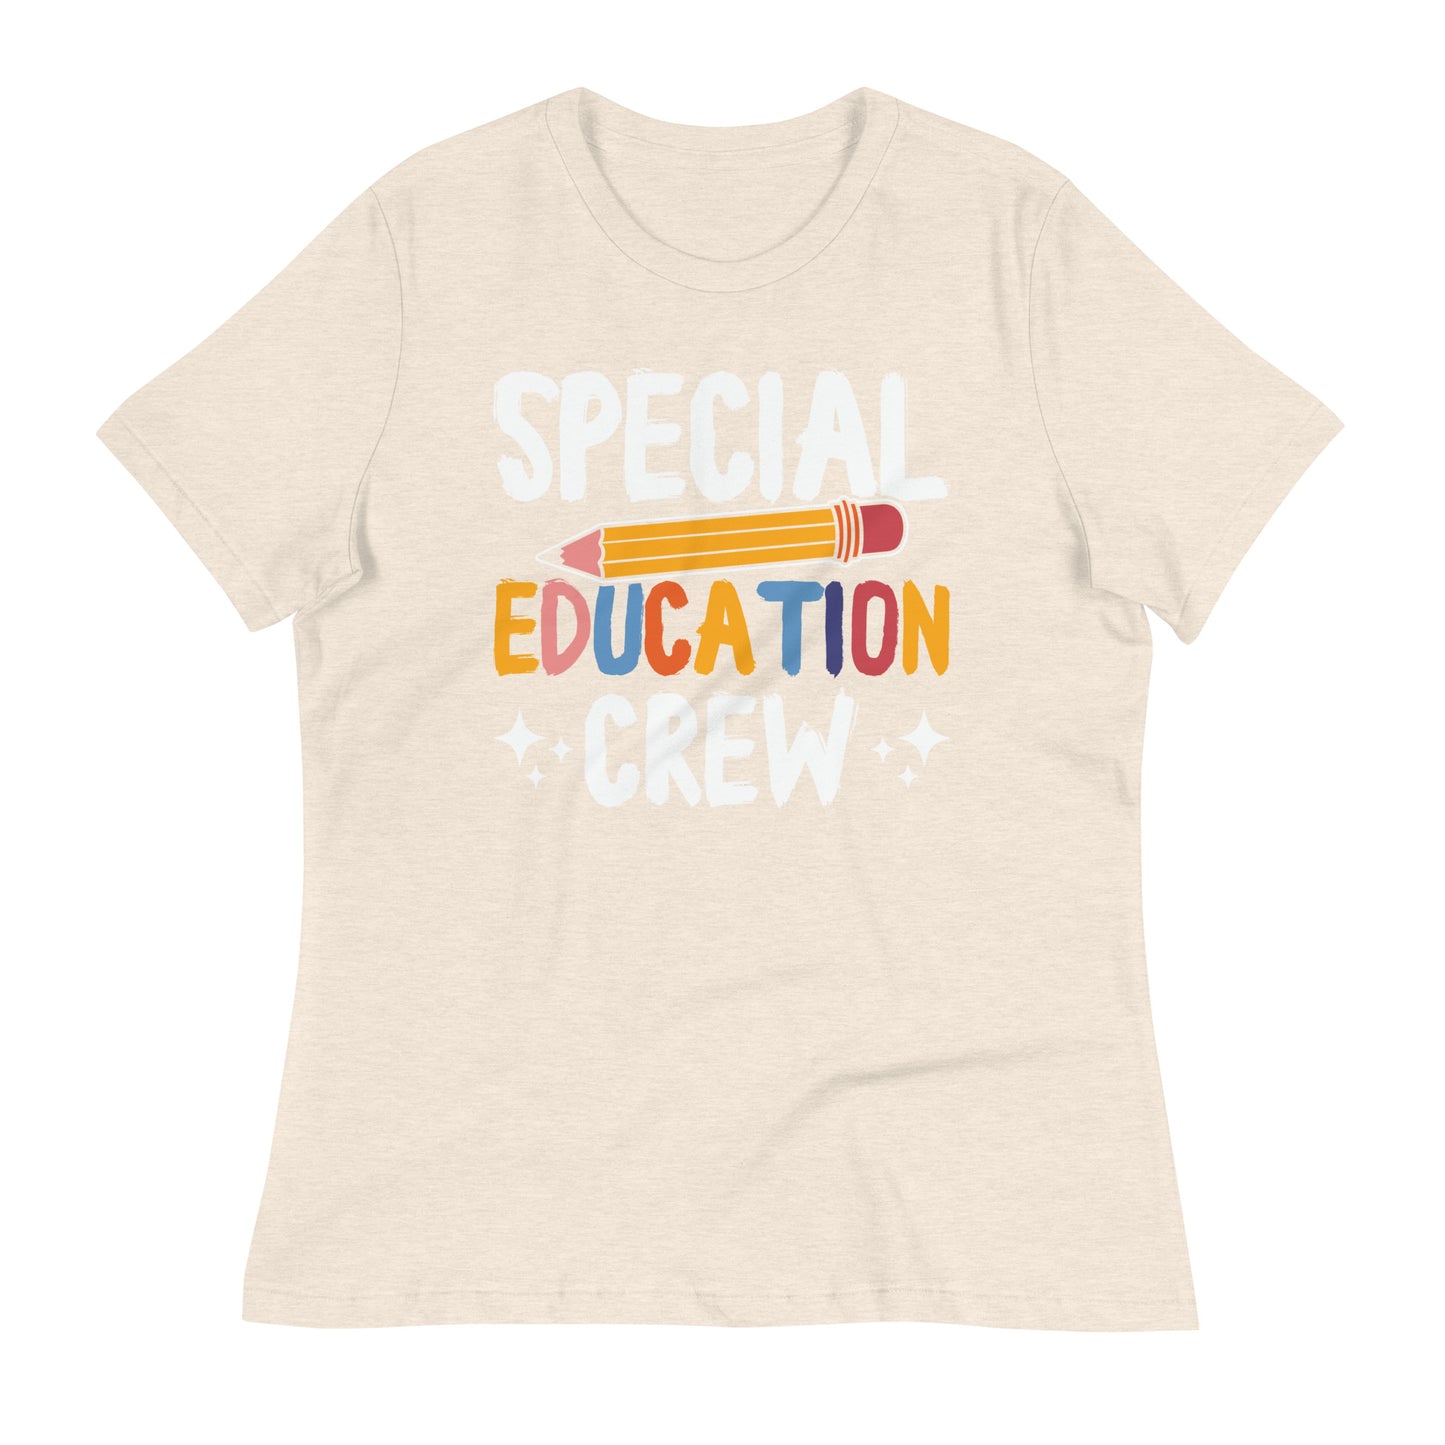 Special Education Crew Teacher Bella Canvas Relaxed Women's T-Shirt